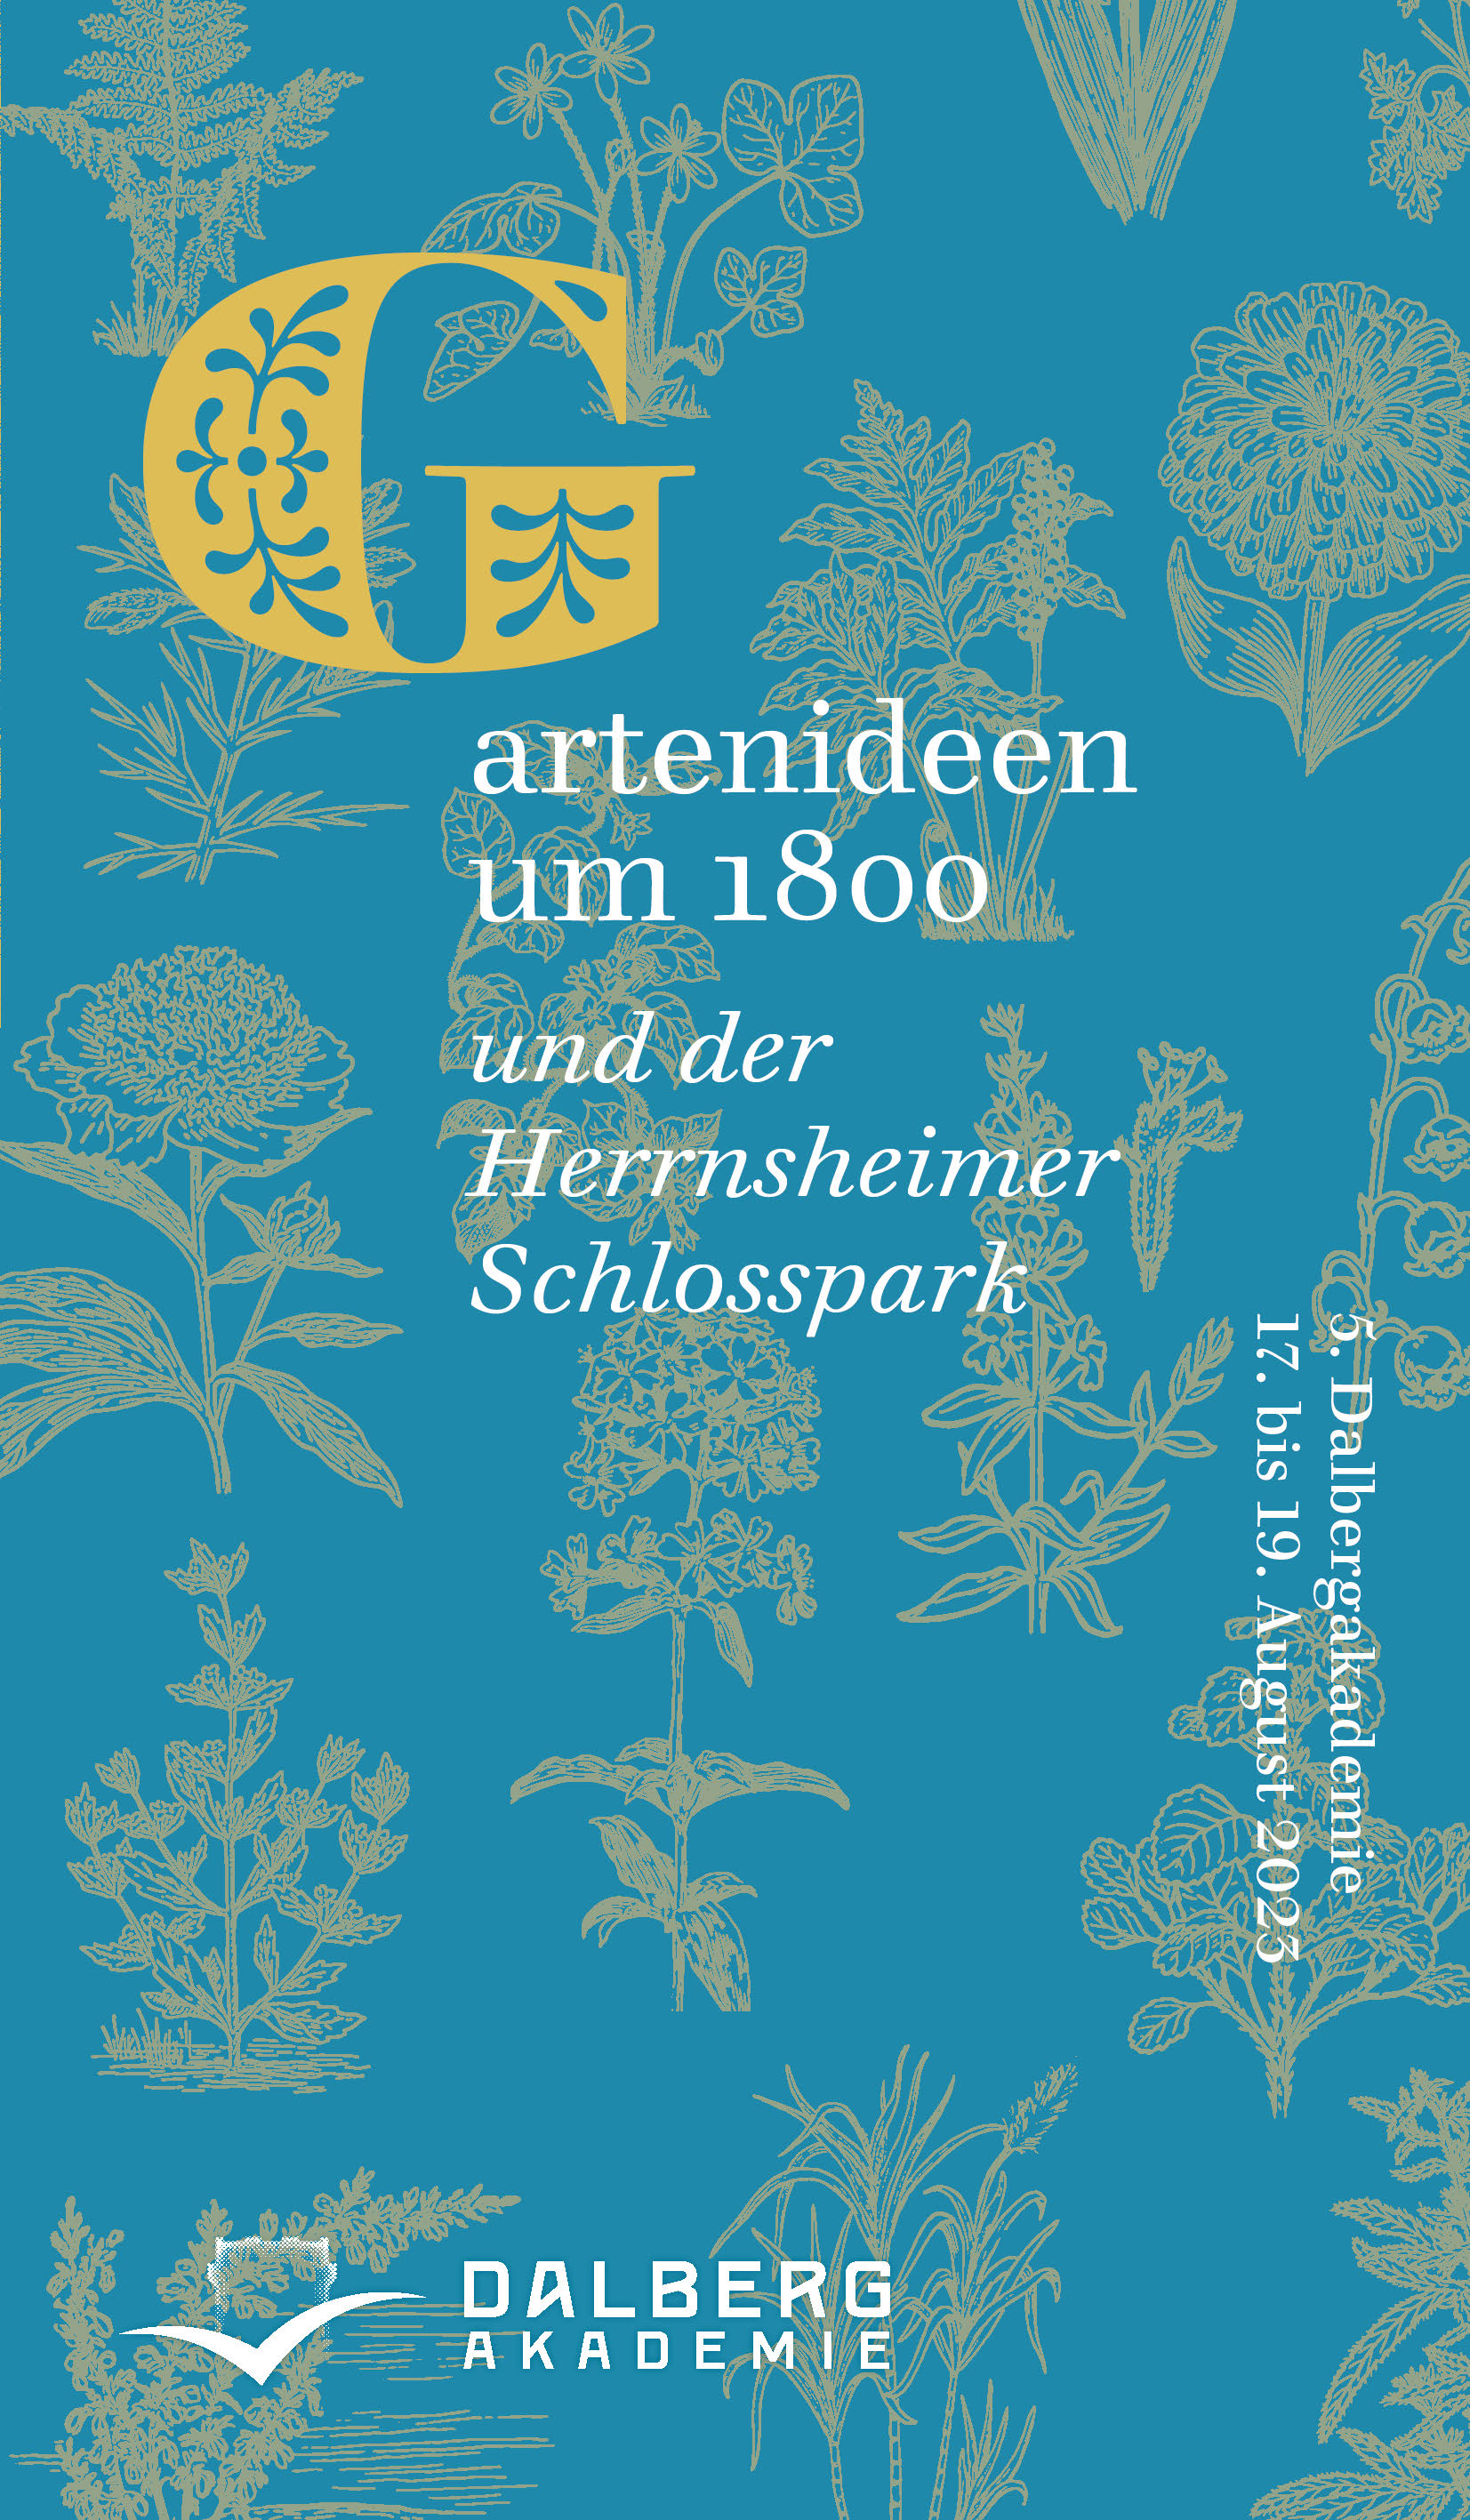 Faltblatt Gartenideen um 1800 und der Herrnsheimer Schlosspark